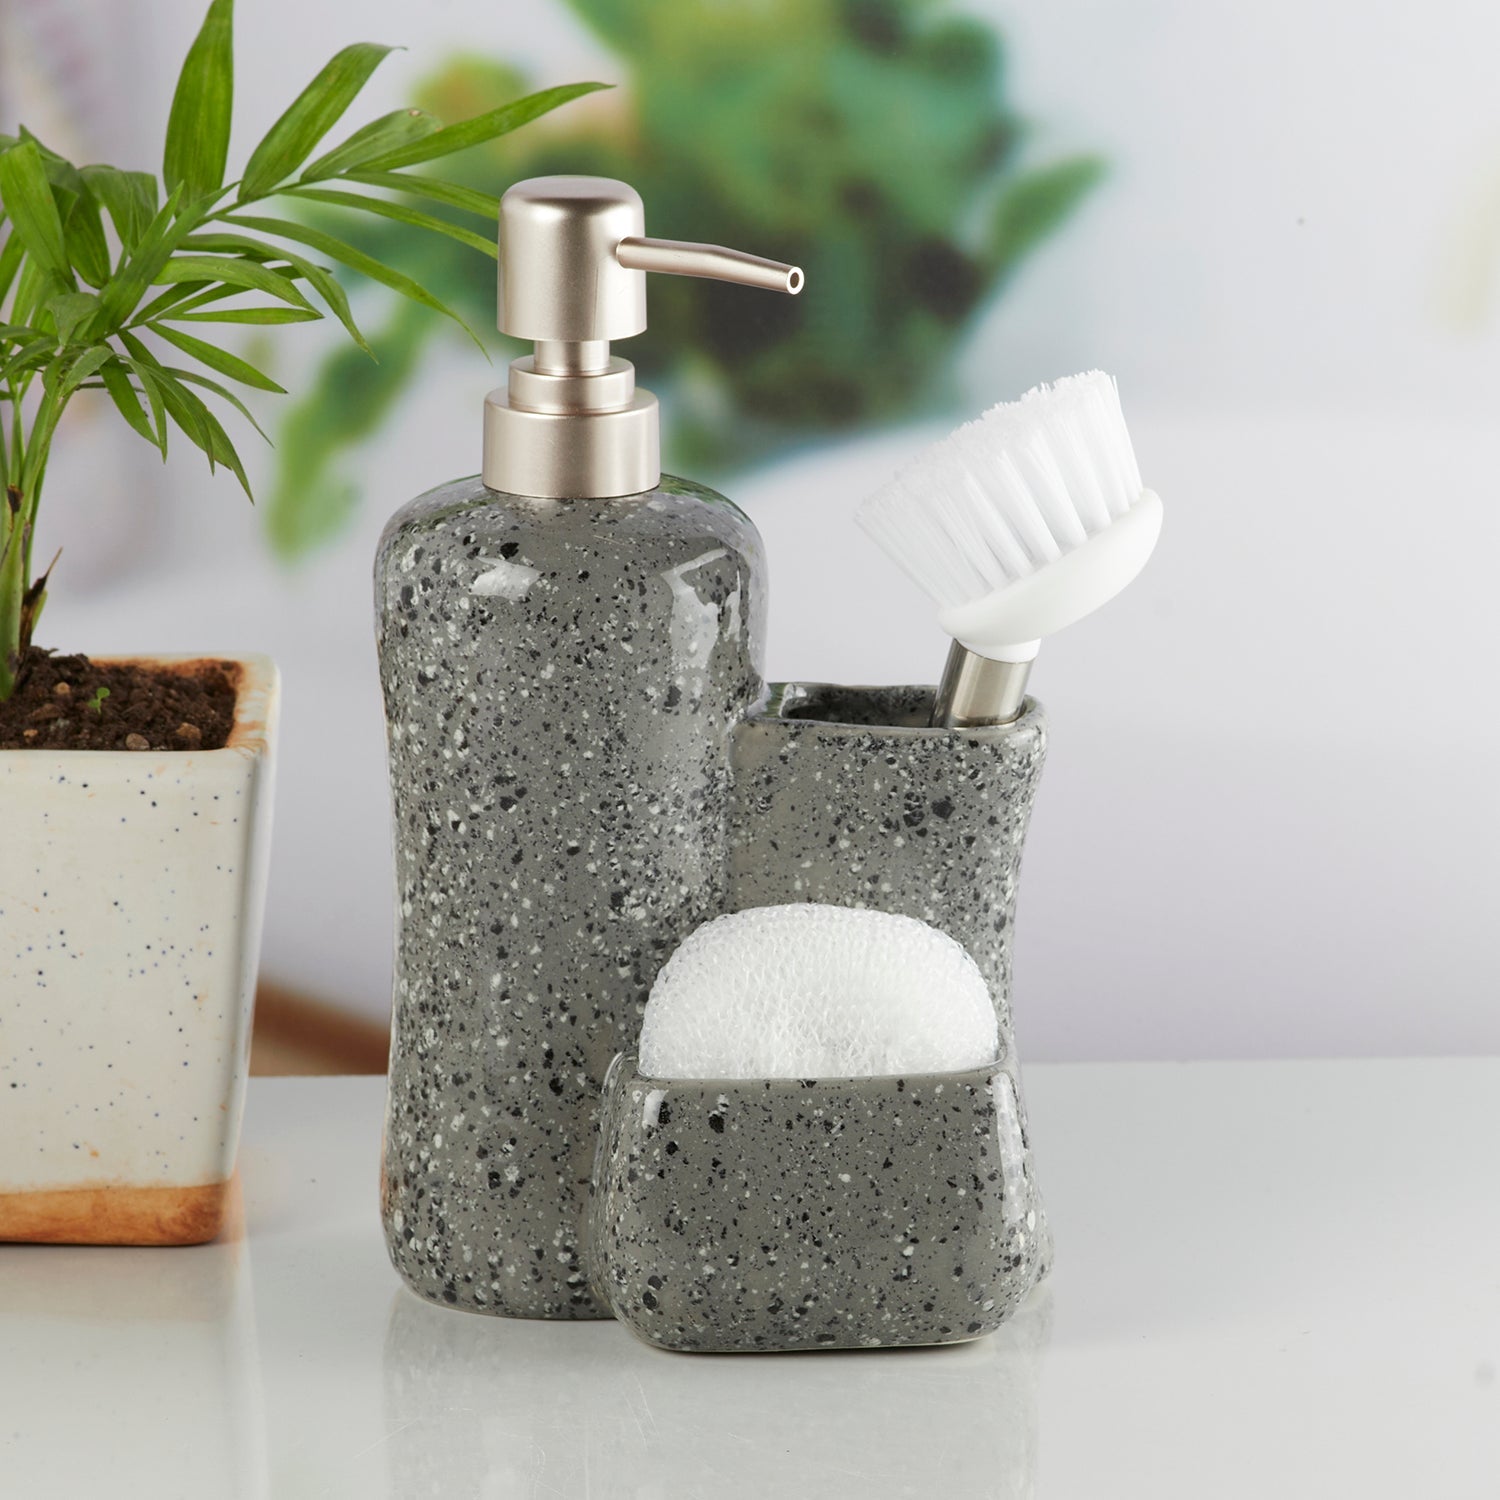 Ceramic Soap Dispenser handwash Pump for Bathroom, Set of 1, Black (10307)